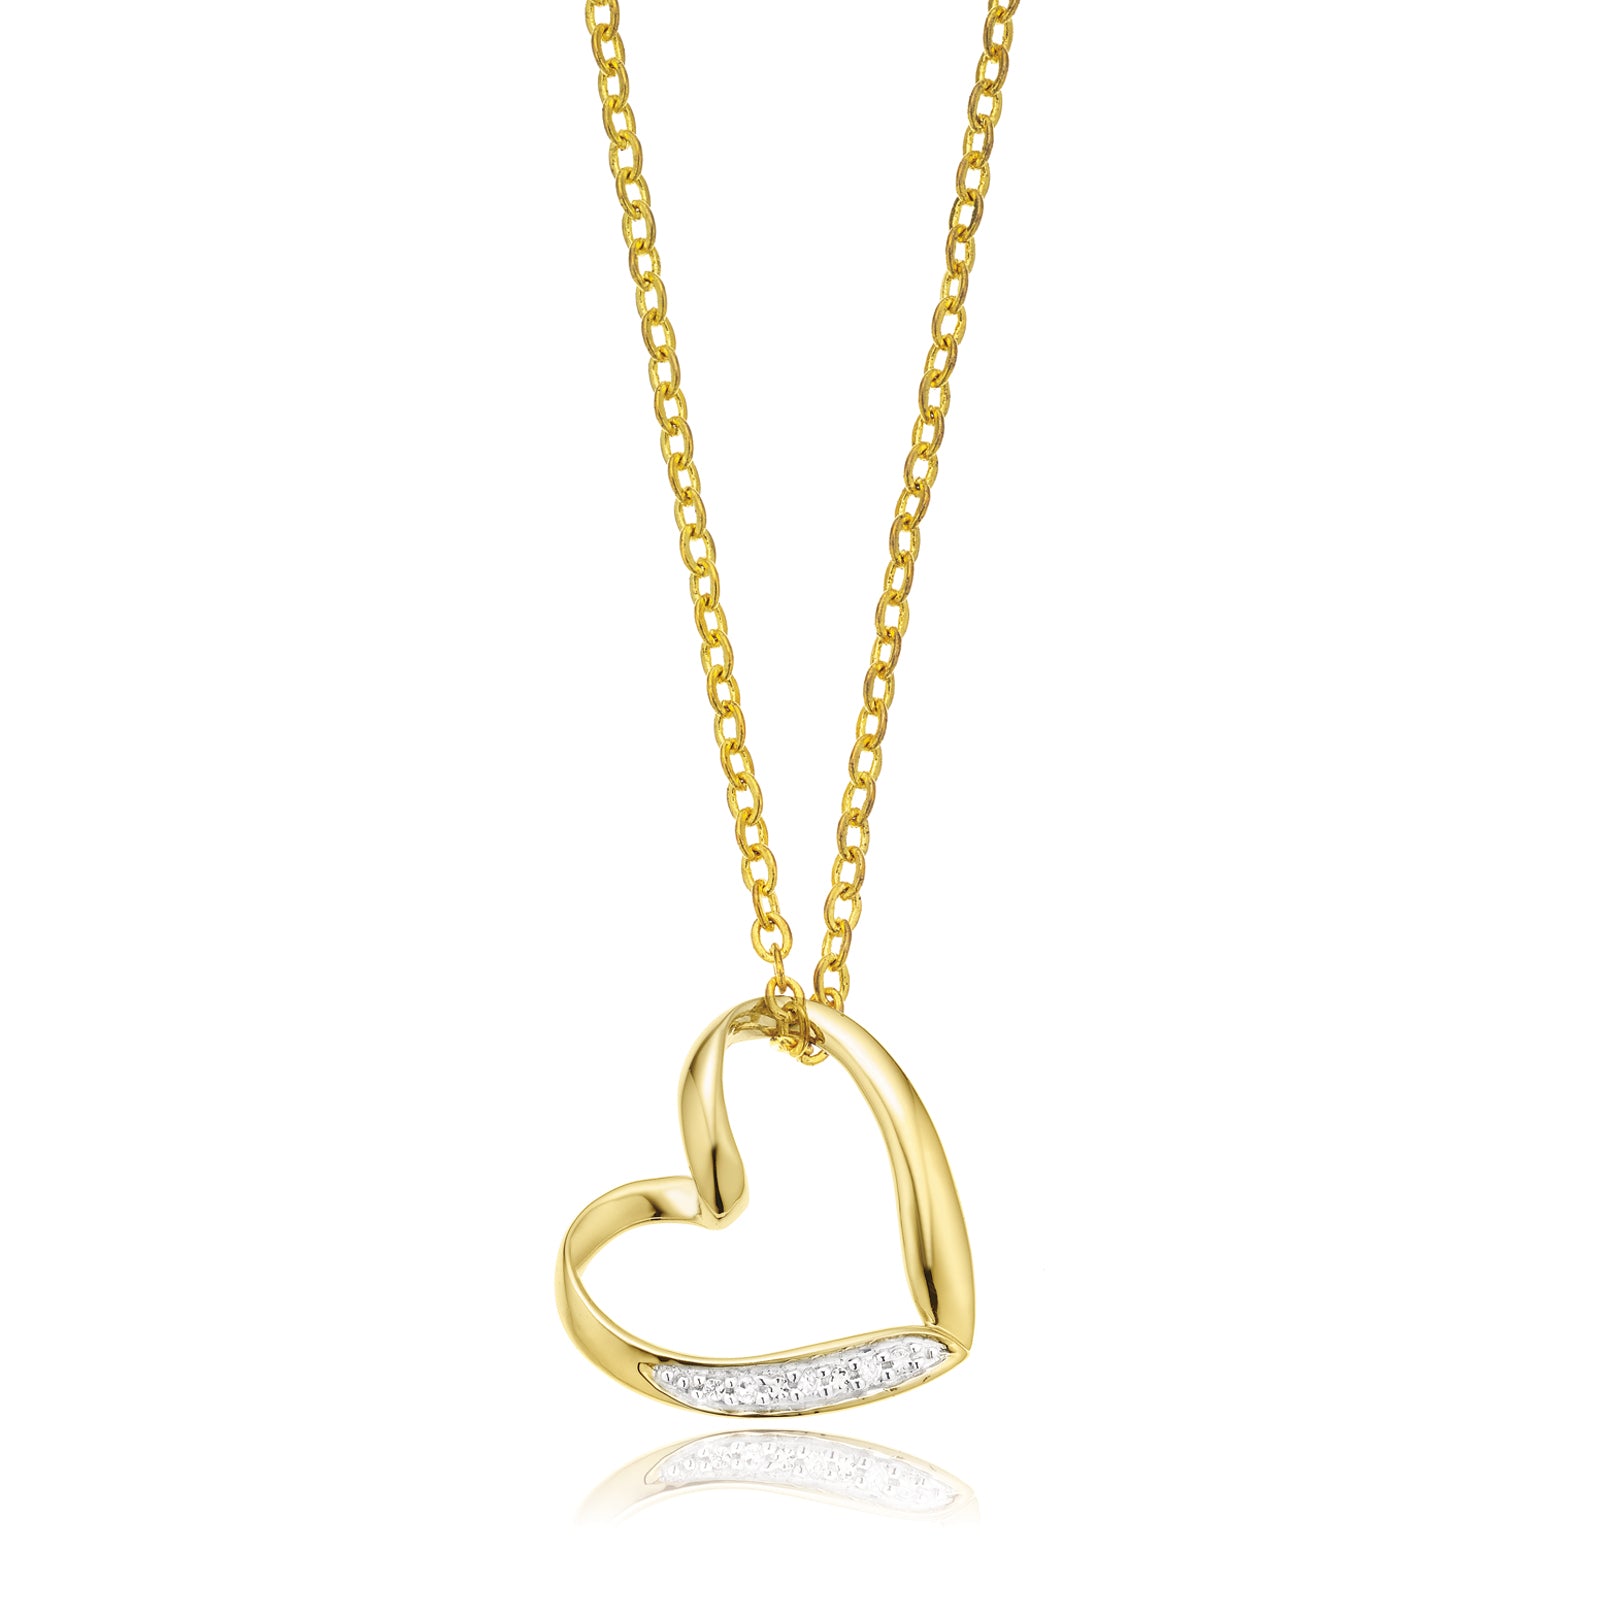 Pendant Item Lock Love Lock Love Heart-shaped Lock Key Diamond Pendant  Necklace Wild